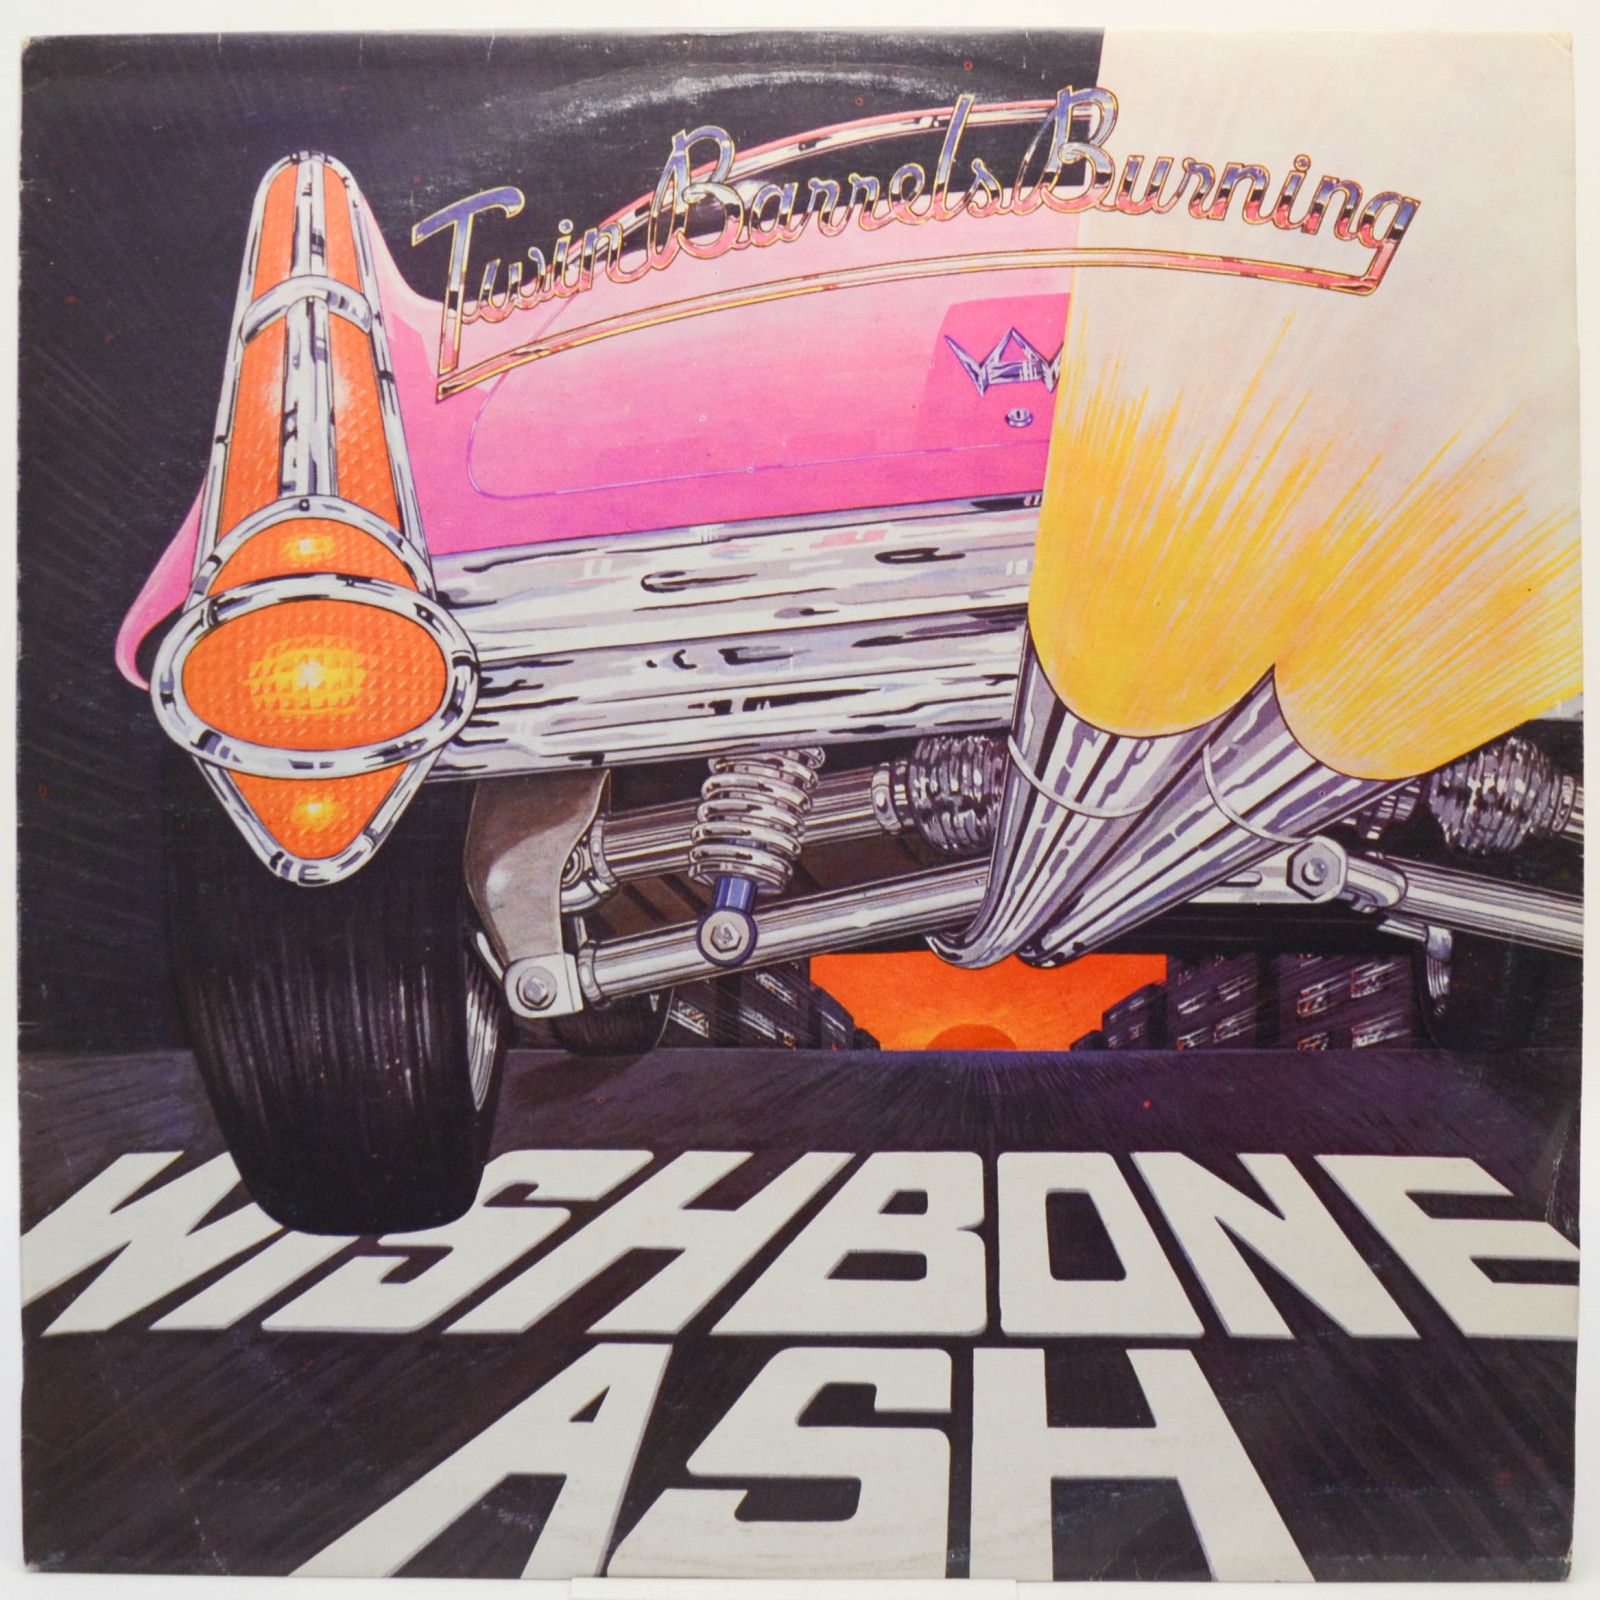 Wishbone Ash — Twin Barrels Burning, 1983